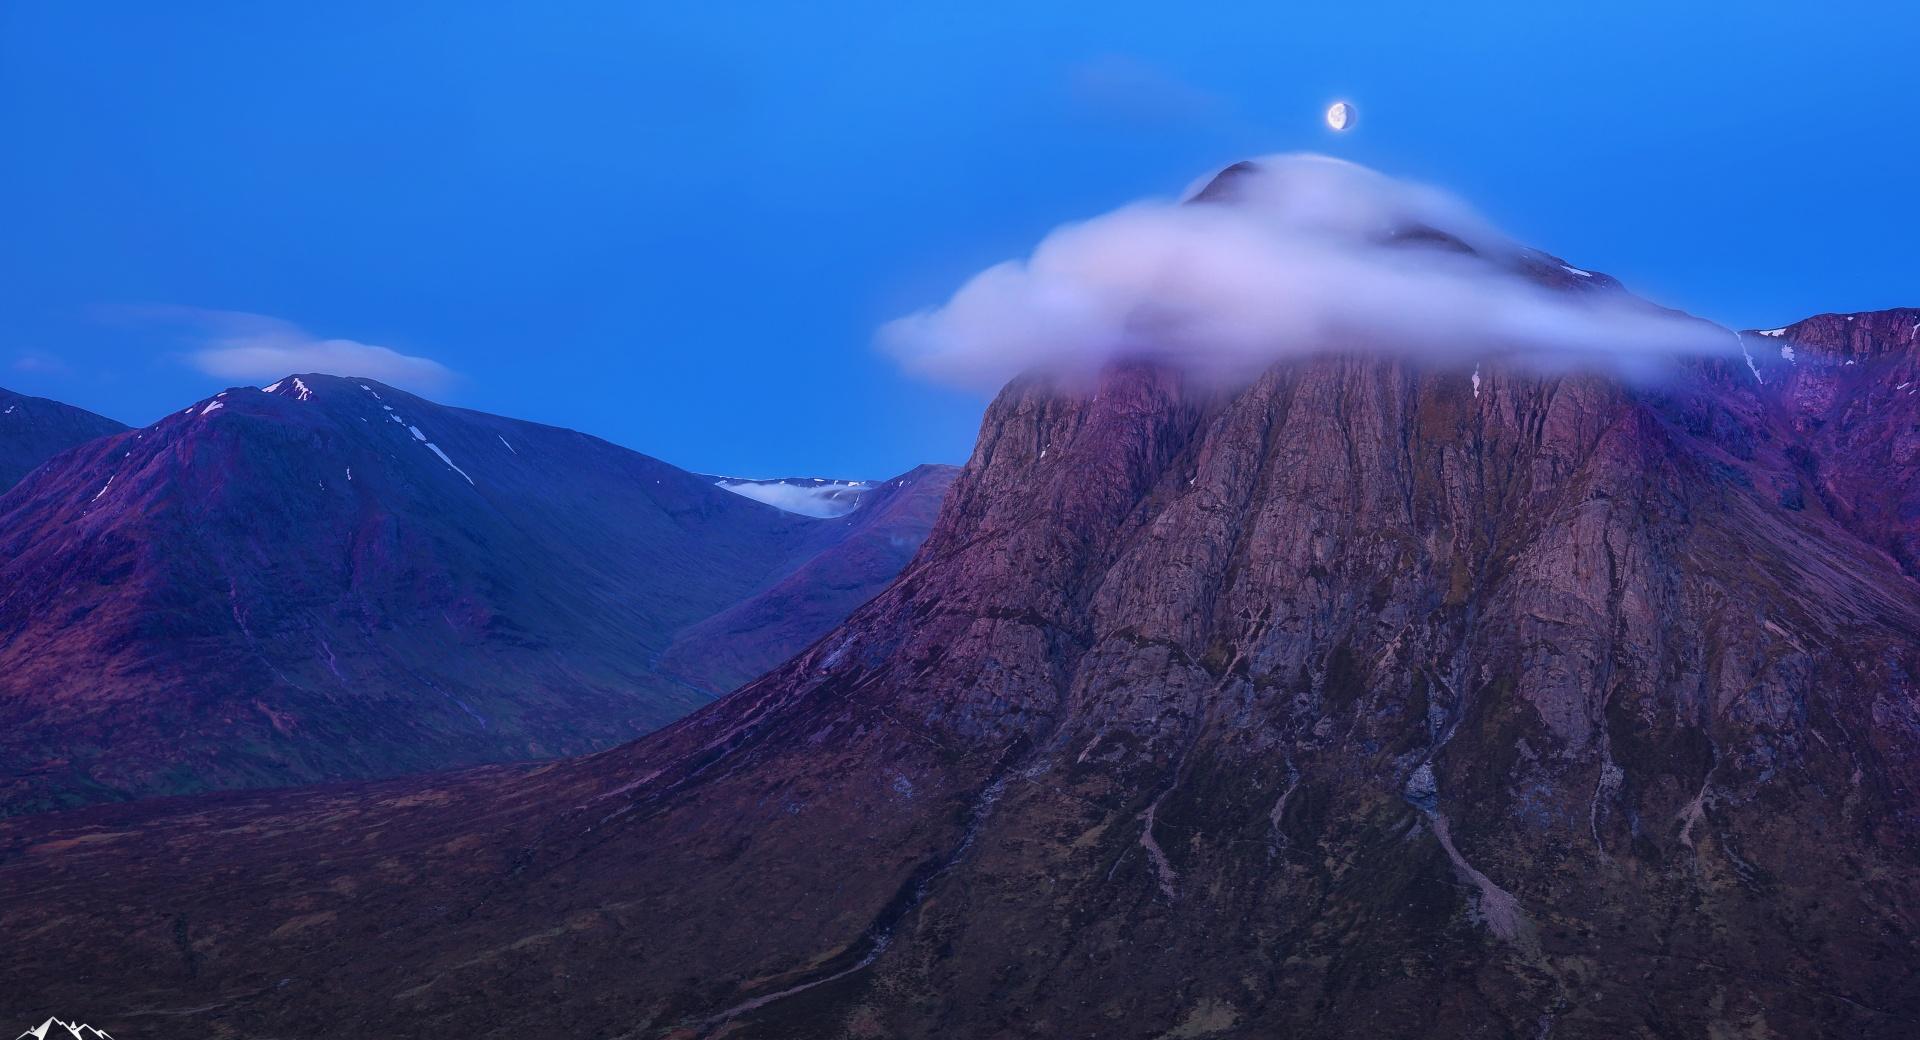 Beinn a Chrulaiste mountain, Scotland at 1600 x 1200 size wallpapers HD quality